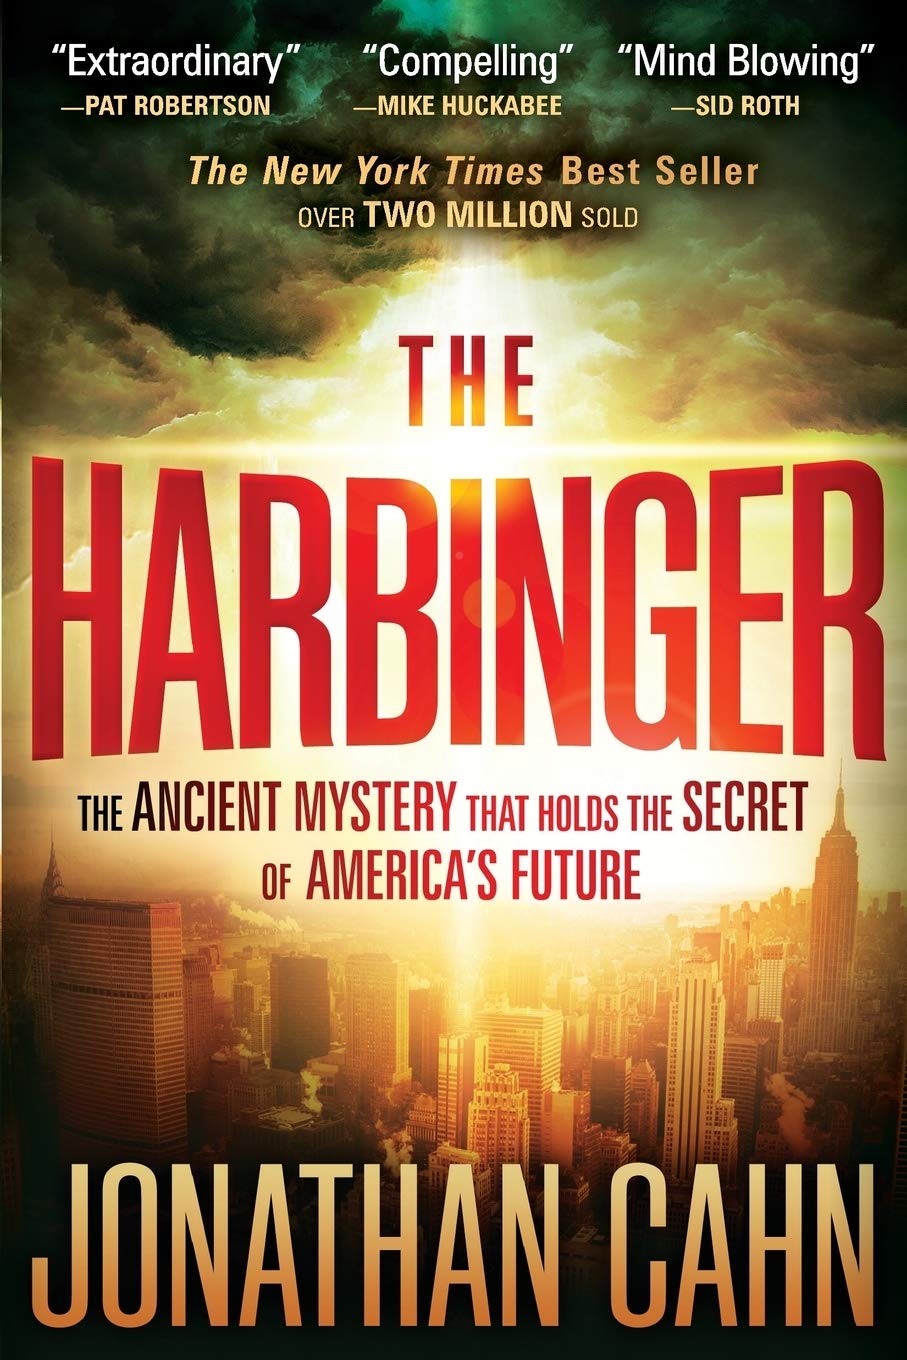 Book: The Harbinger by Jonathan Cahn